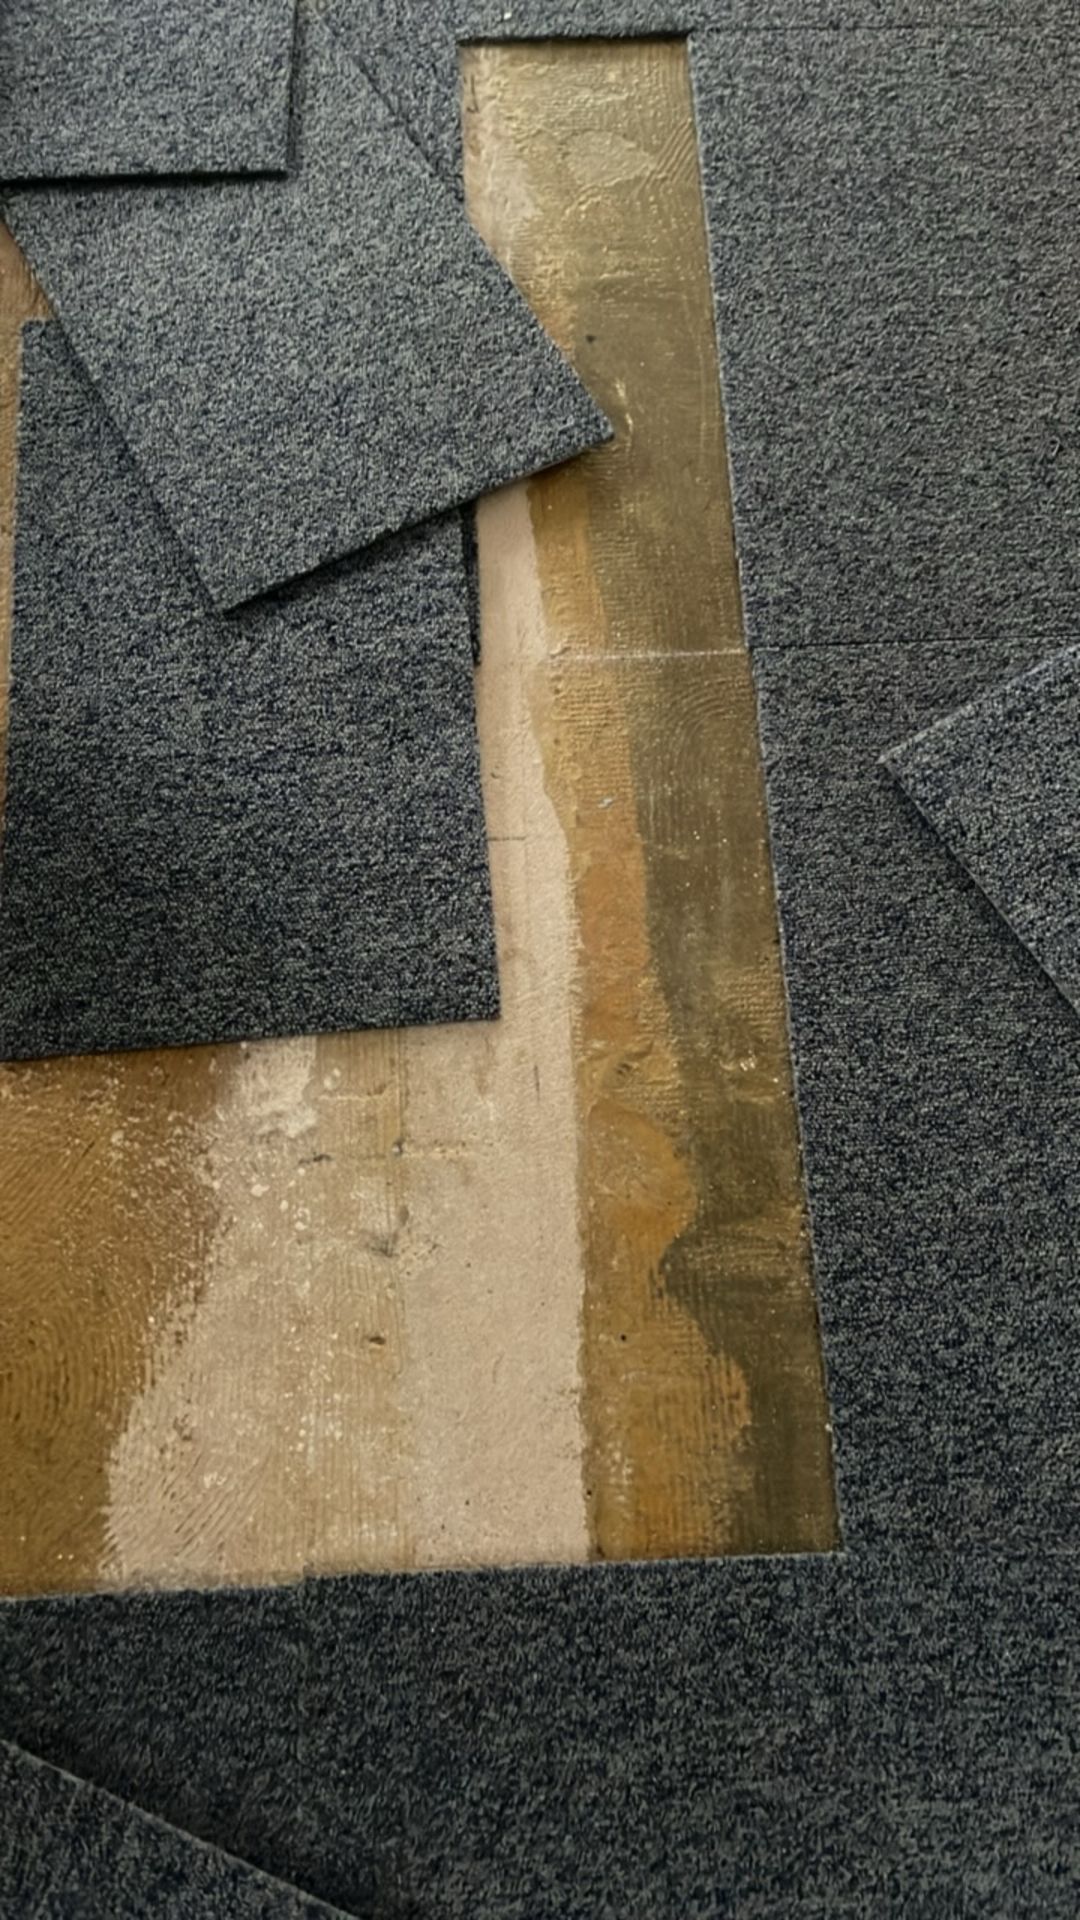 160Sq Mtr Of Blue Carpet Tiles - Image 3 of 3